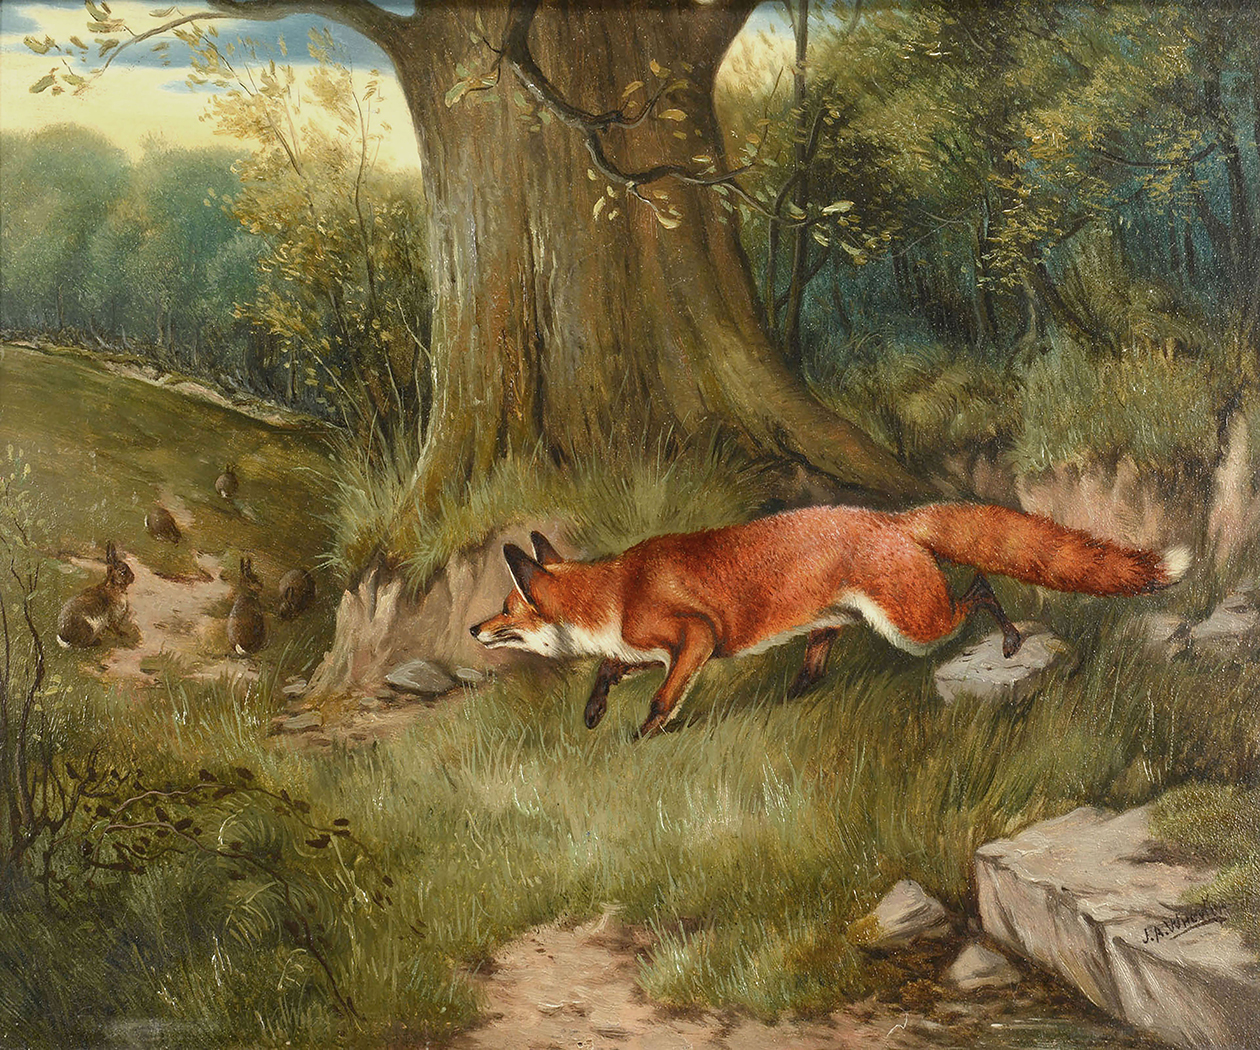 Equestrian/Fox Equestrian Fox Hunting Rabbits Framed Oil Paintin ...